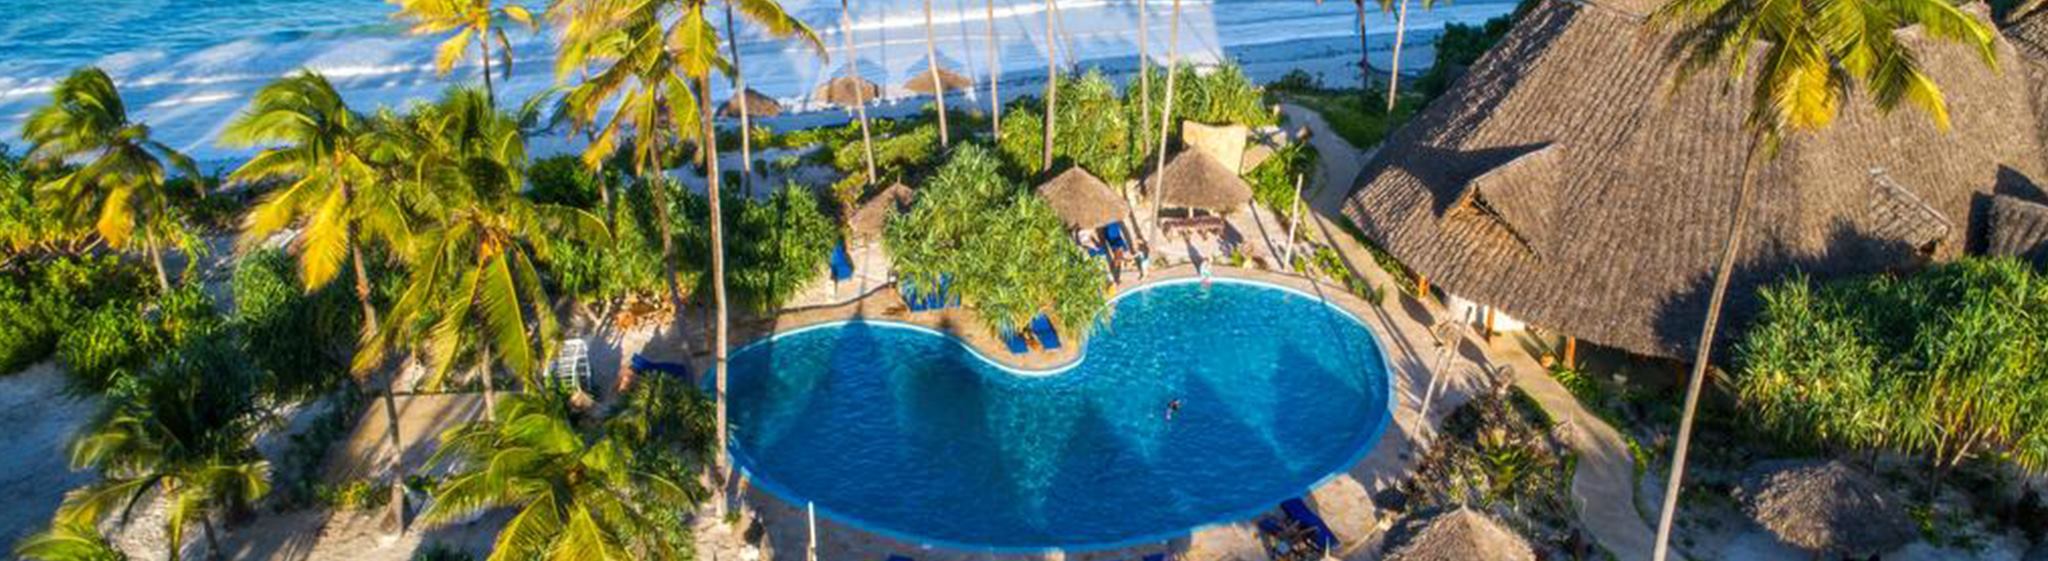 Zanzibar Queen Hotel - Safanta Tours & Travel Company Limited